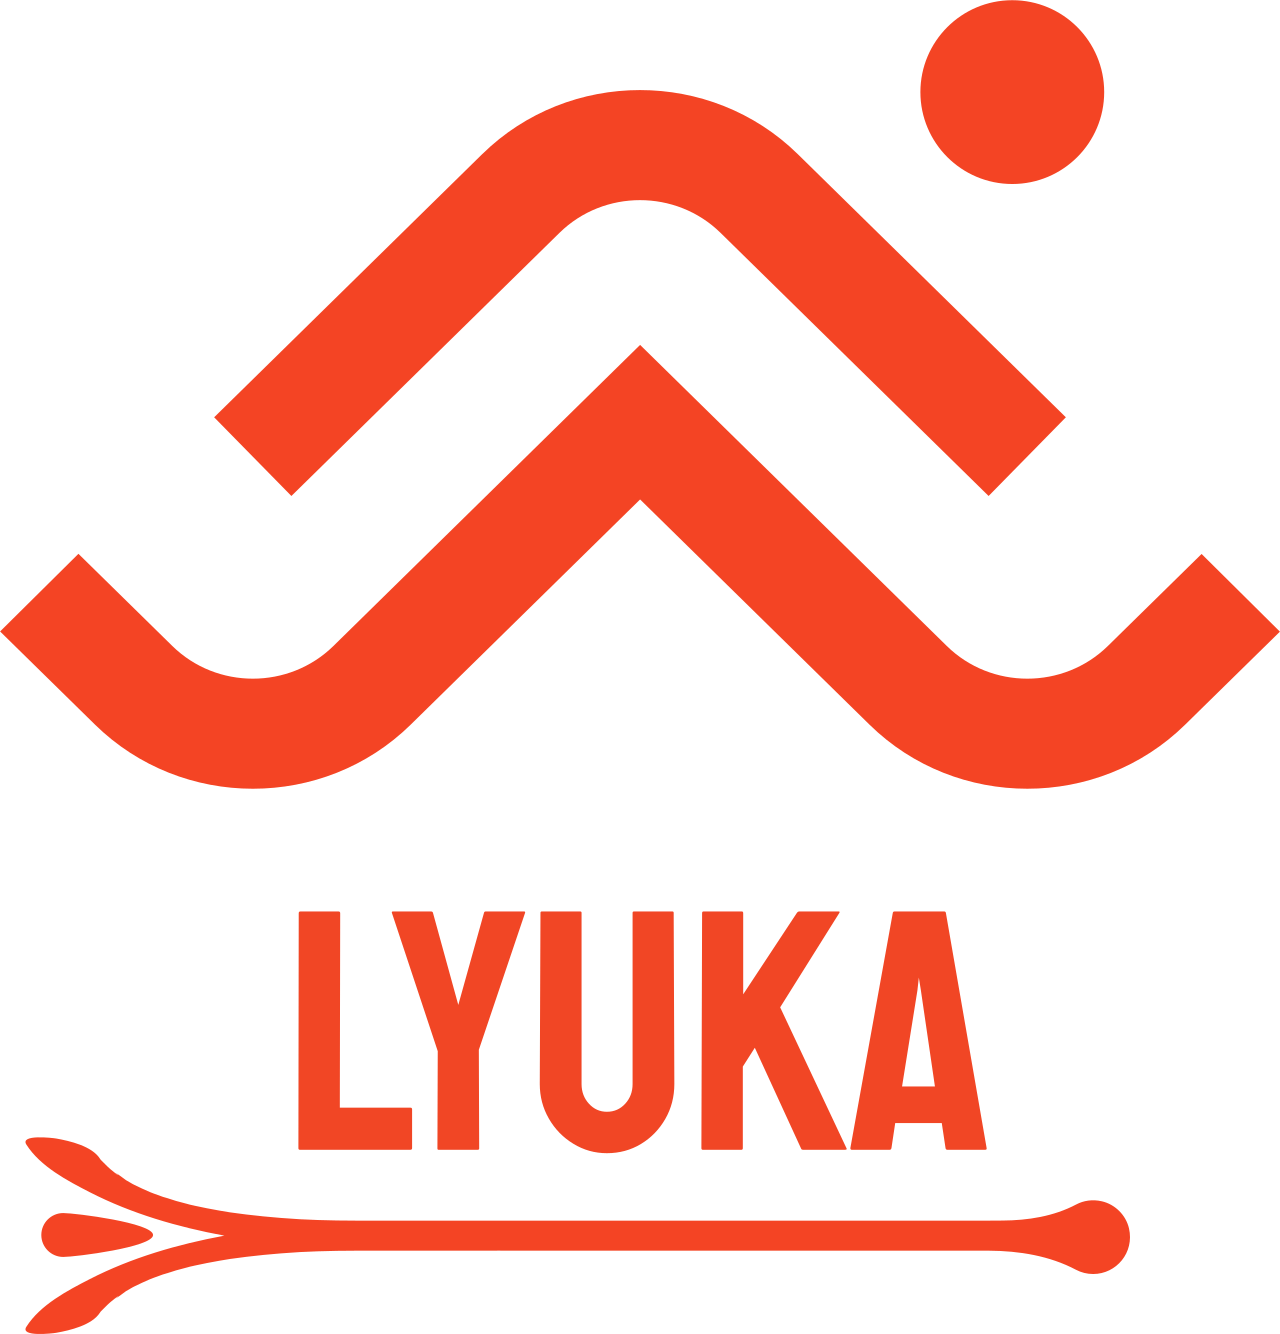 Lyuka's logo